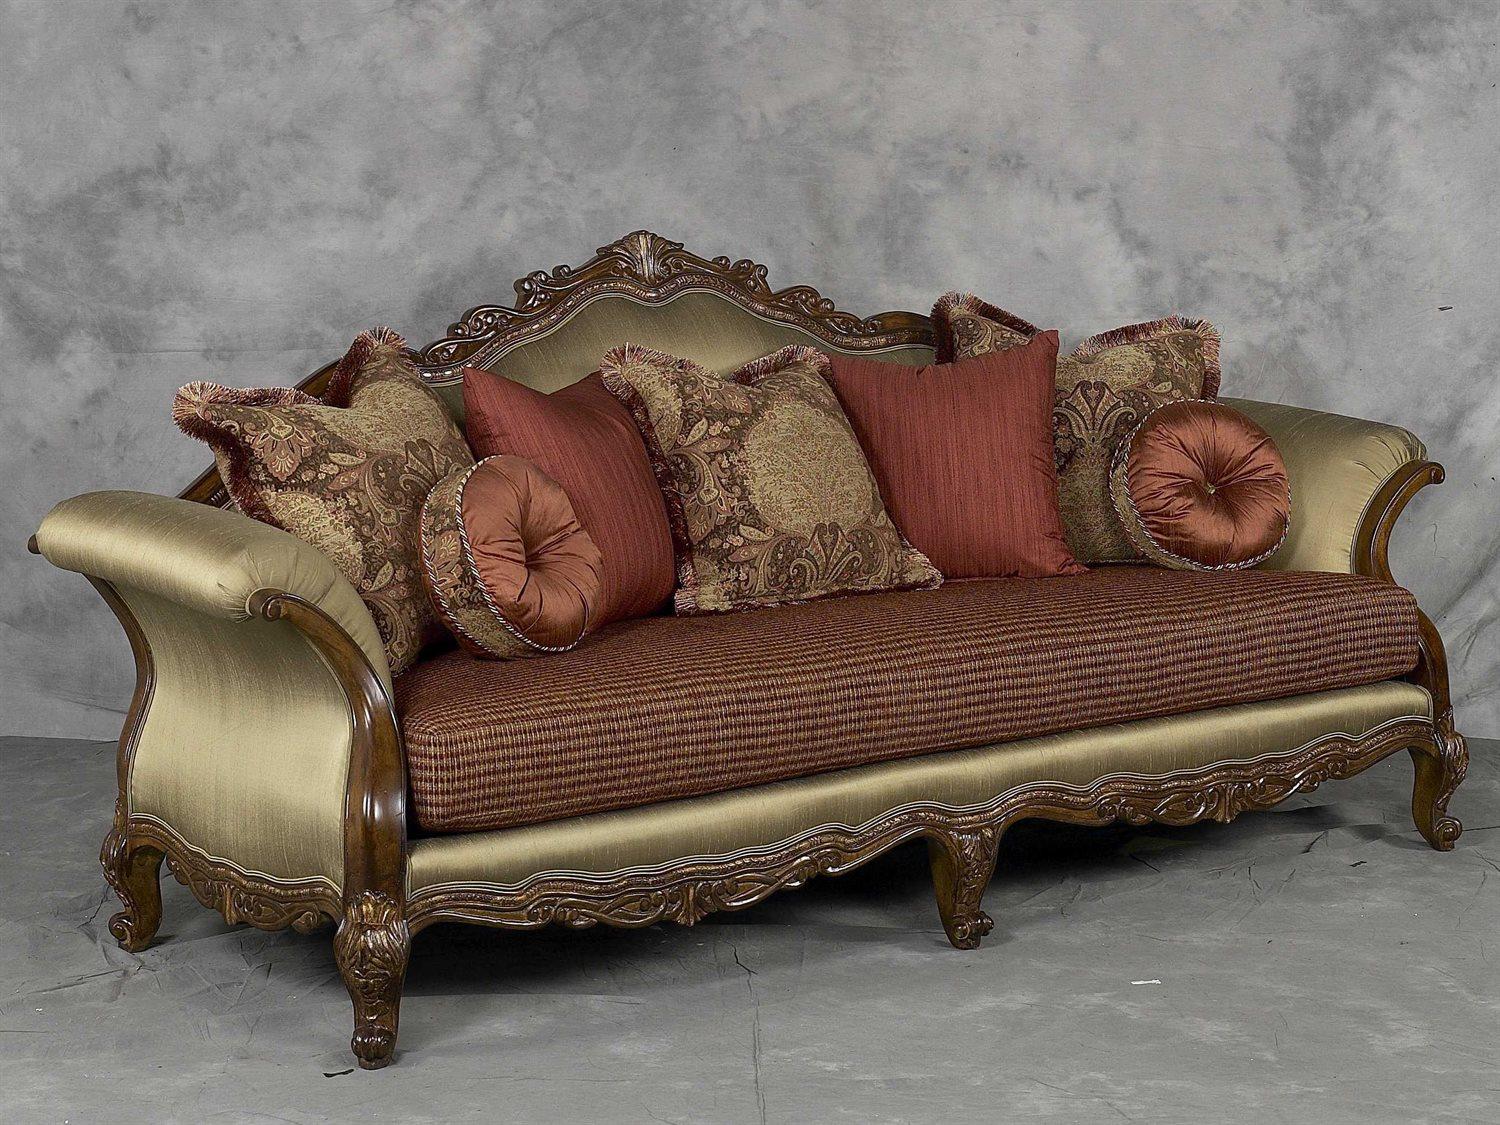 

    
Luxury Silk Chenille Solid Wood Formal Sofa Set 3Pcs Benetti's Regalia Classic
